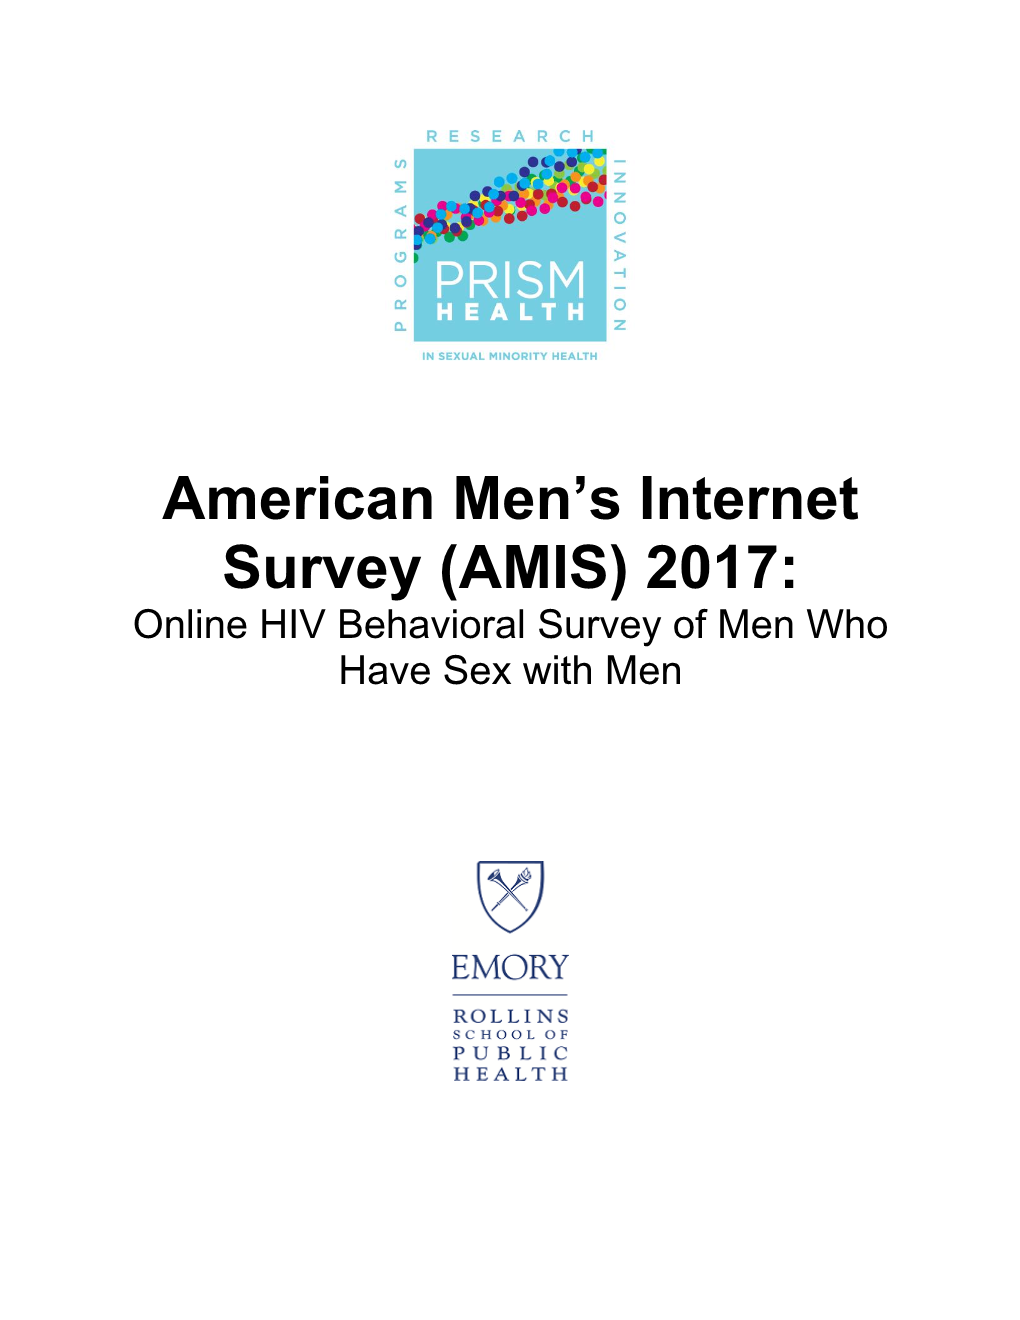 American Men's Internet Survey (AMIS) 2017